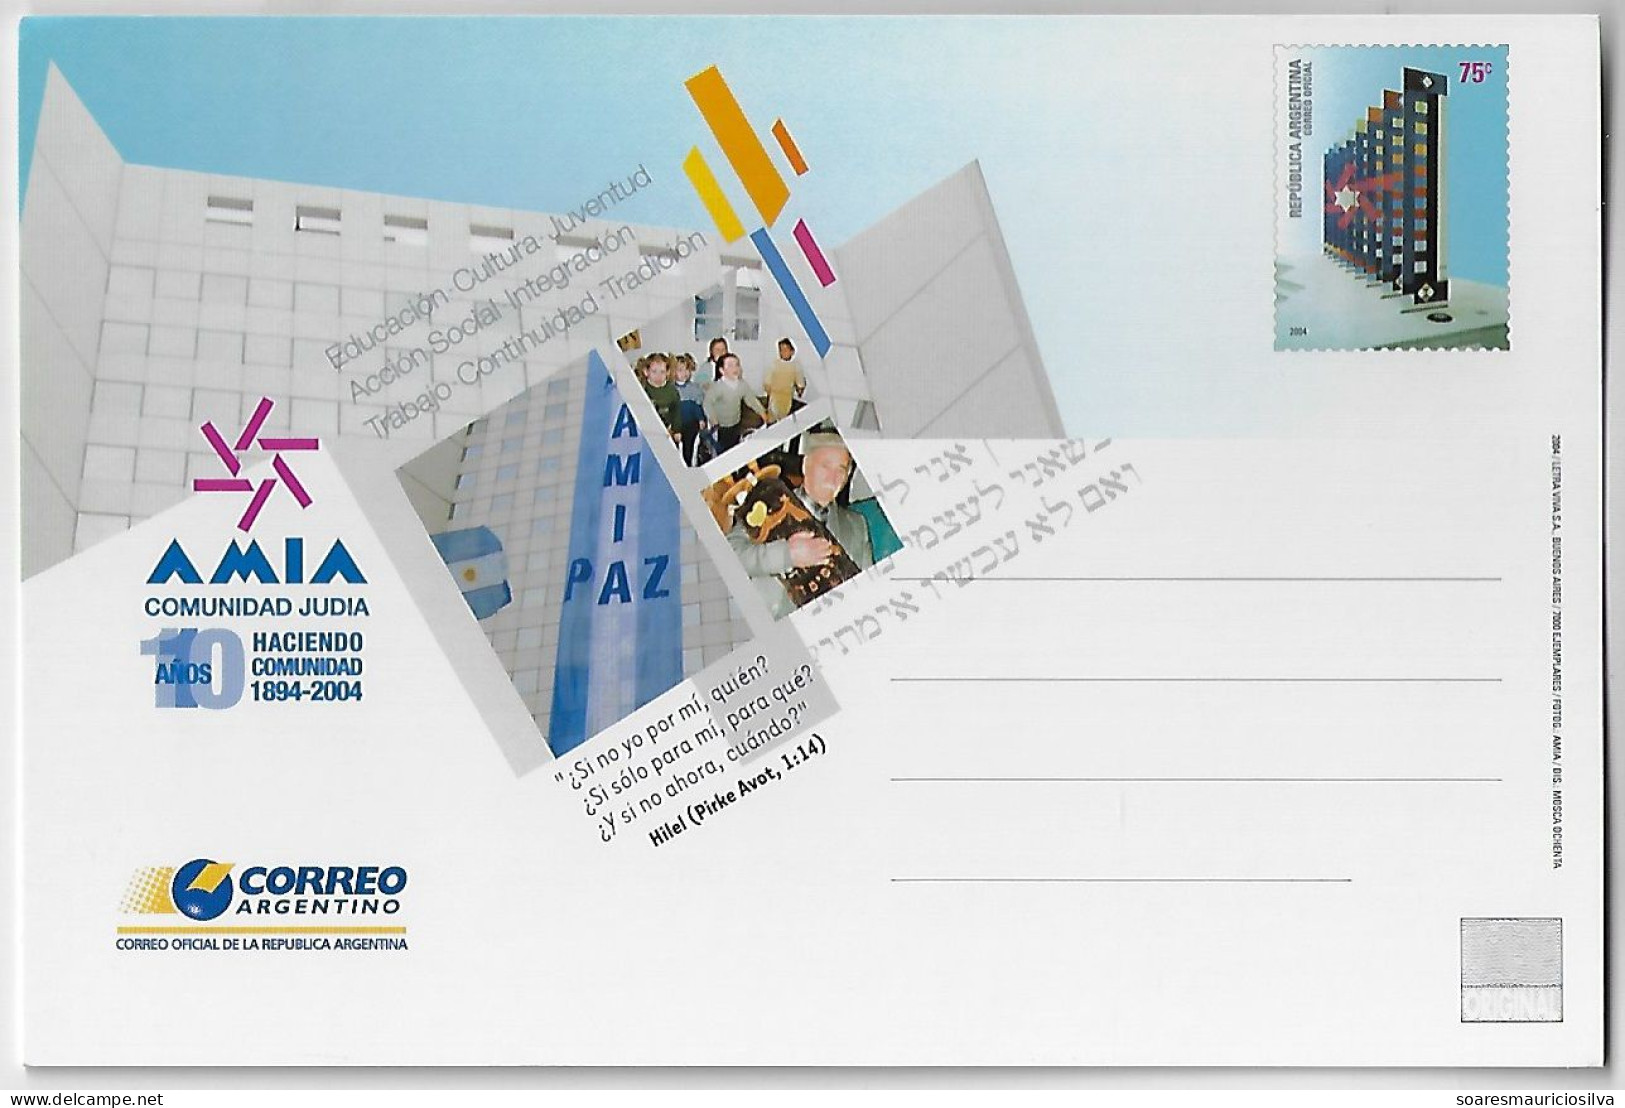 Argentina 2004 Postal Stationery Card AMIA Argentine Israeli Mutual Association Jewish Community Unused - Enteros Postales